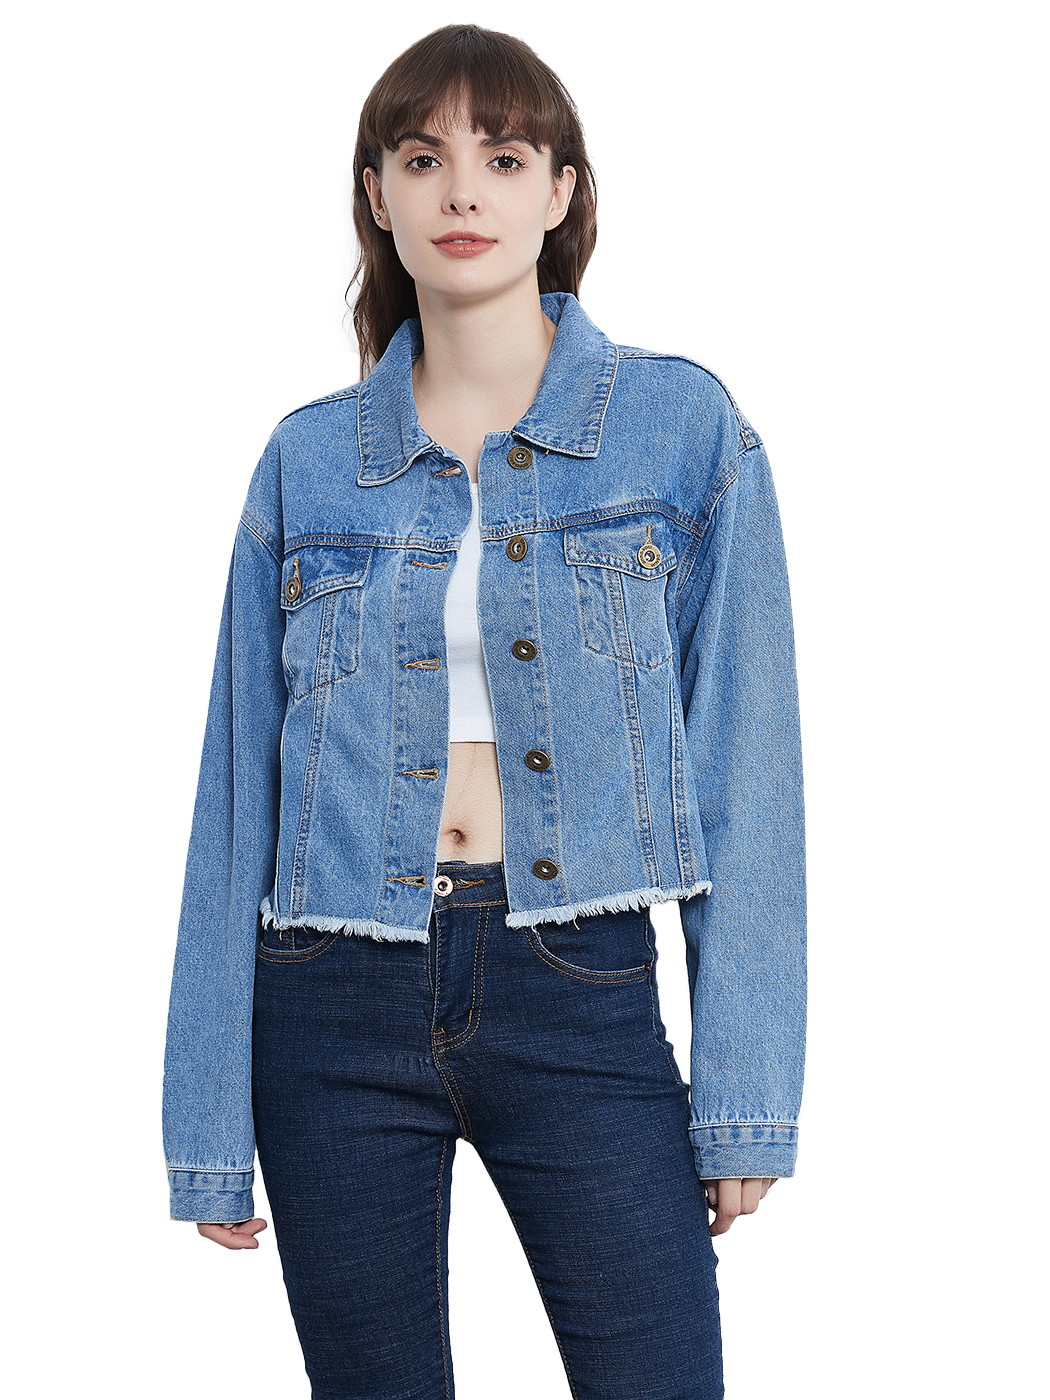 Women Jean Jacket Button Down Distressed Oversized Denim Jackets Coat, Light Blue, Medium - image 1 of 6